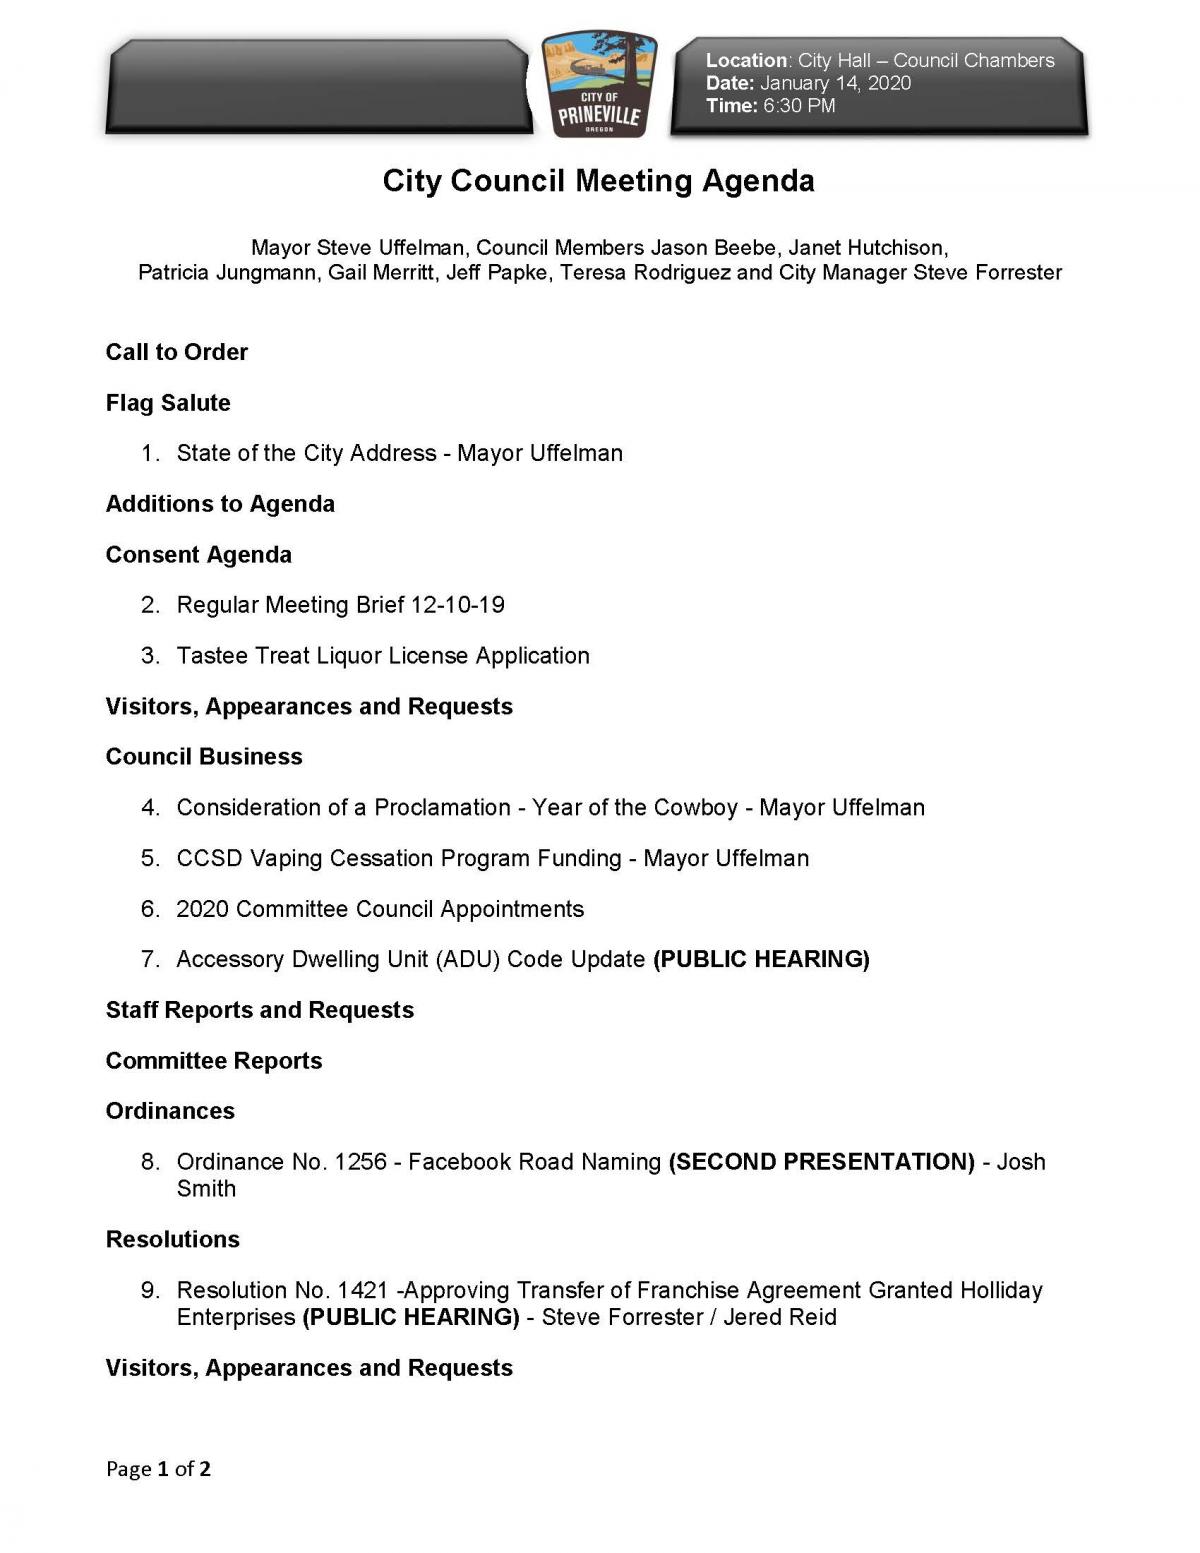 Council Agenda 1-14-20